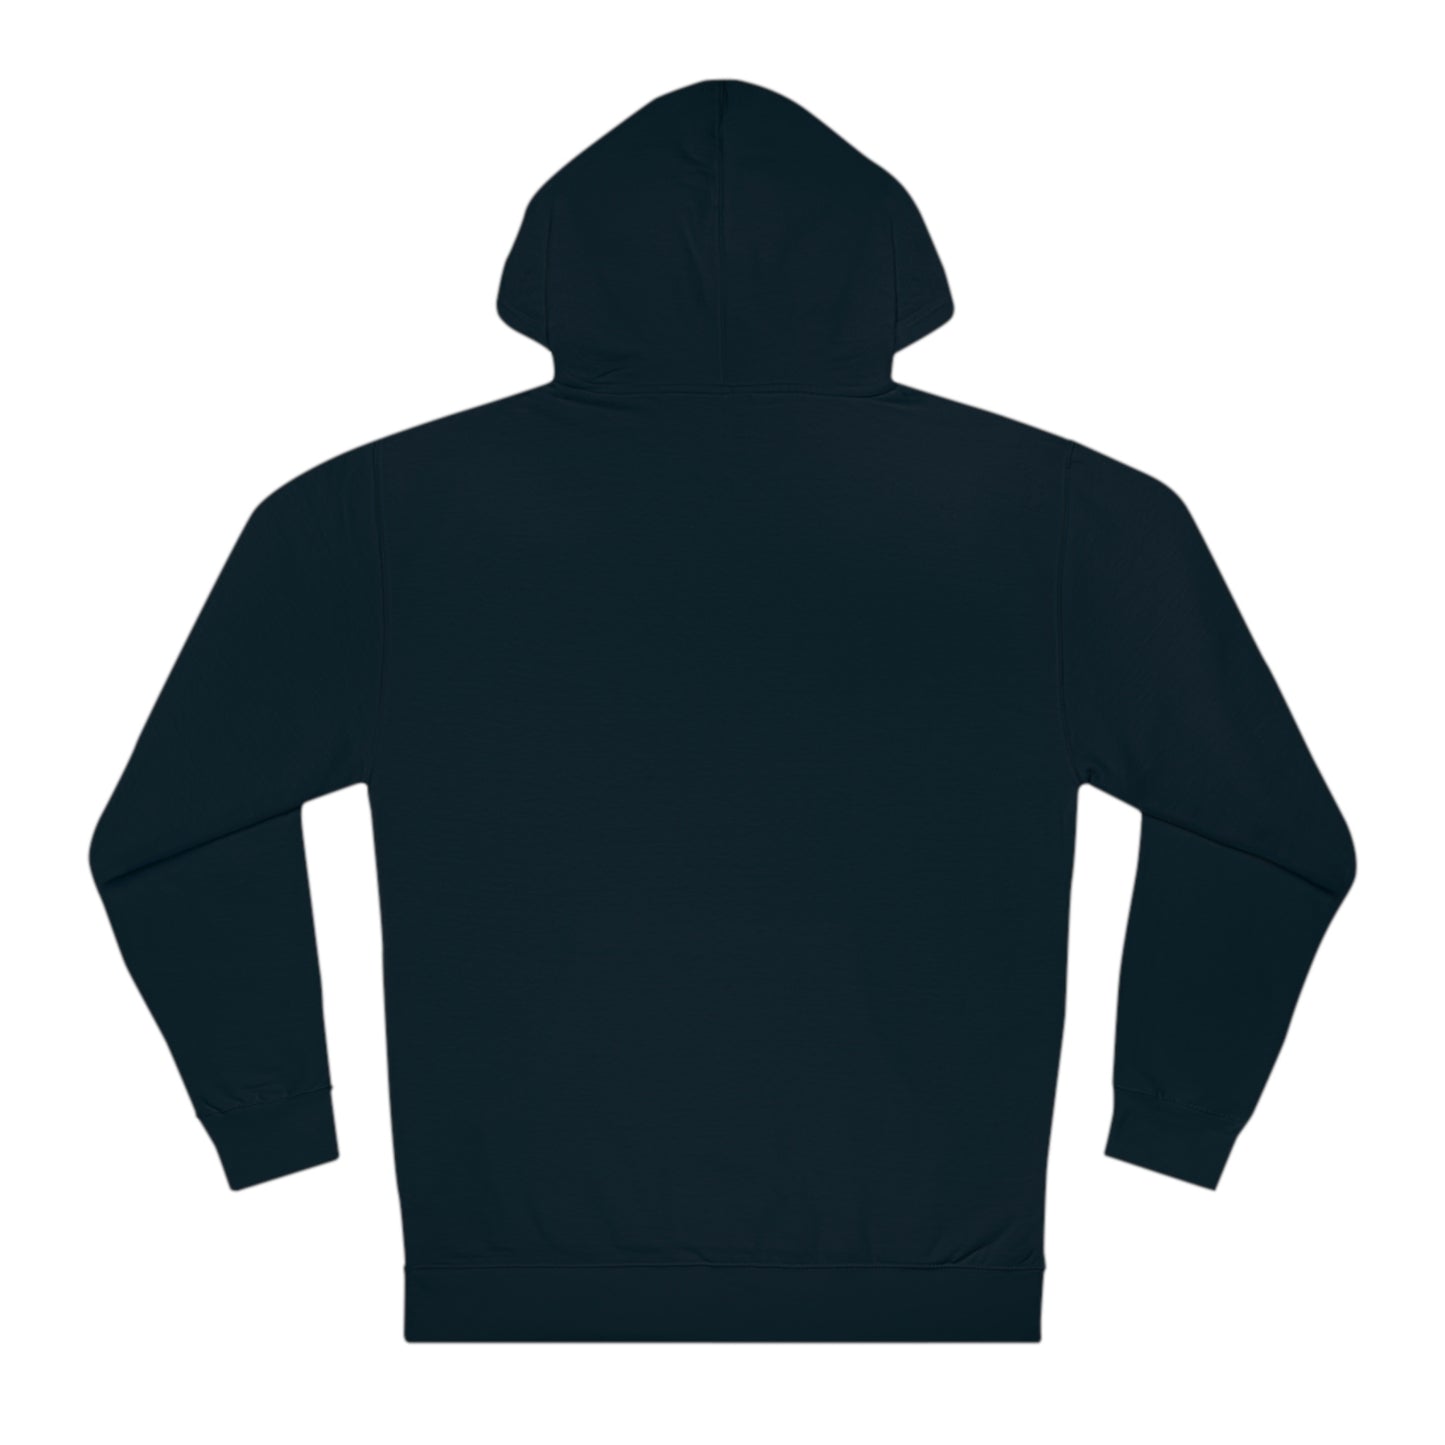 Unisex Hooded Sweatshirt - Forging Unbreakable Athletes